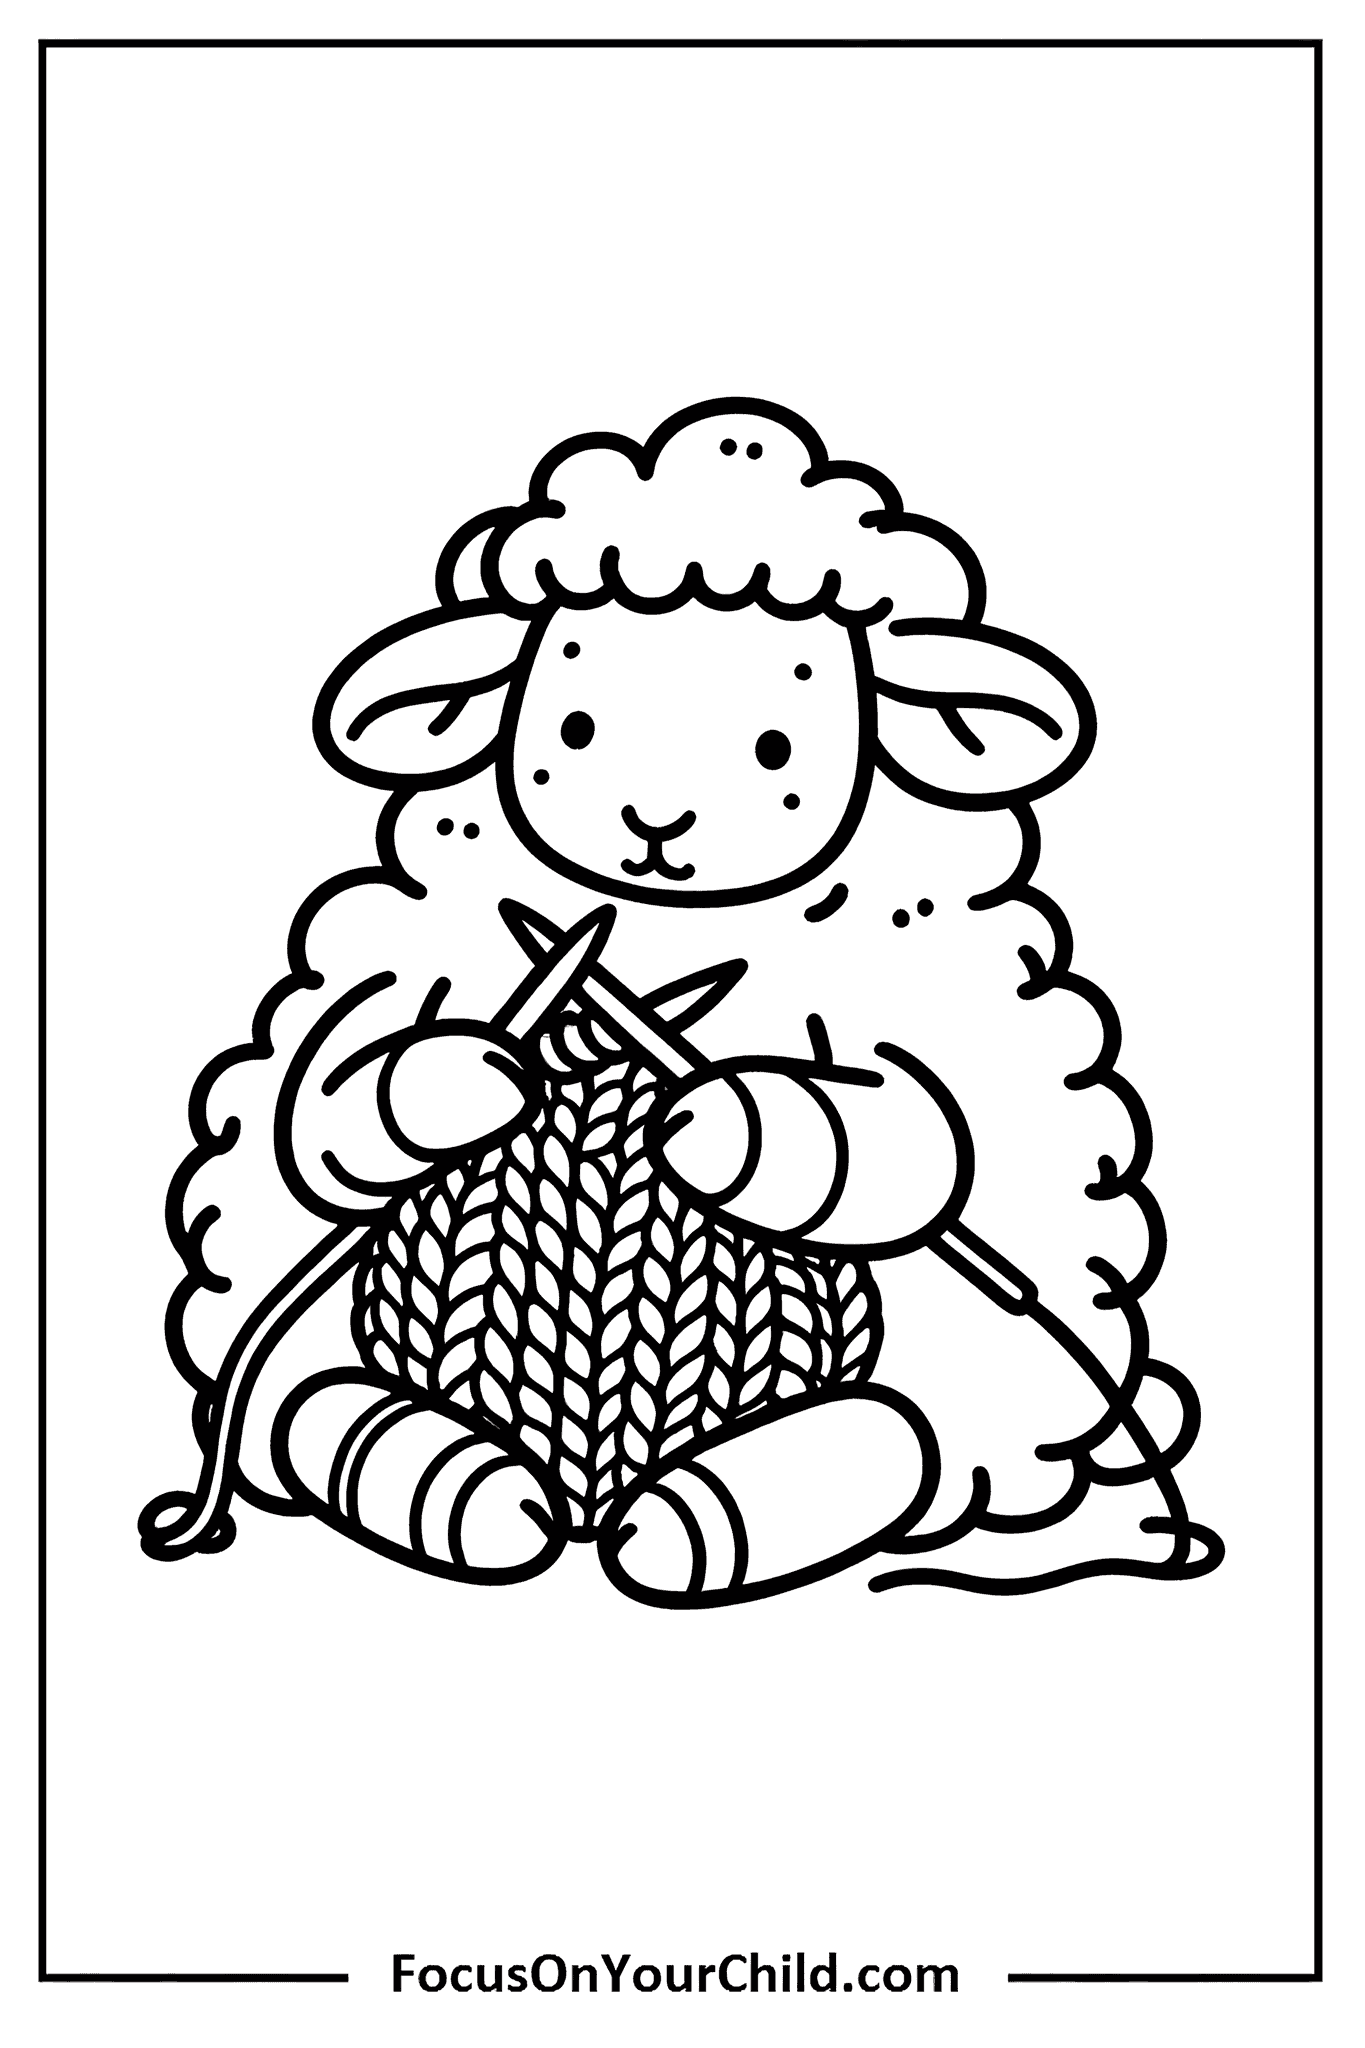 Charming cartoon sheep knitting cozy scarf.